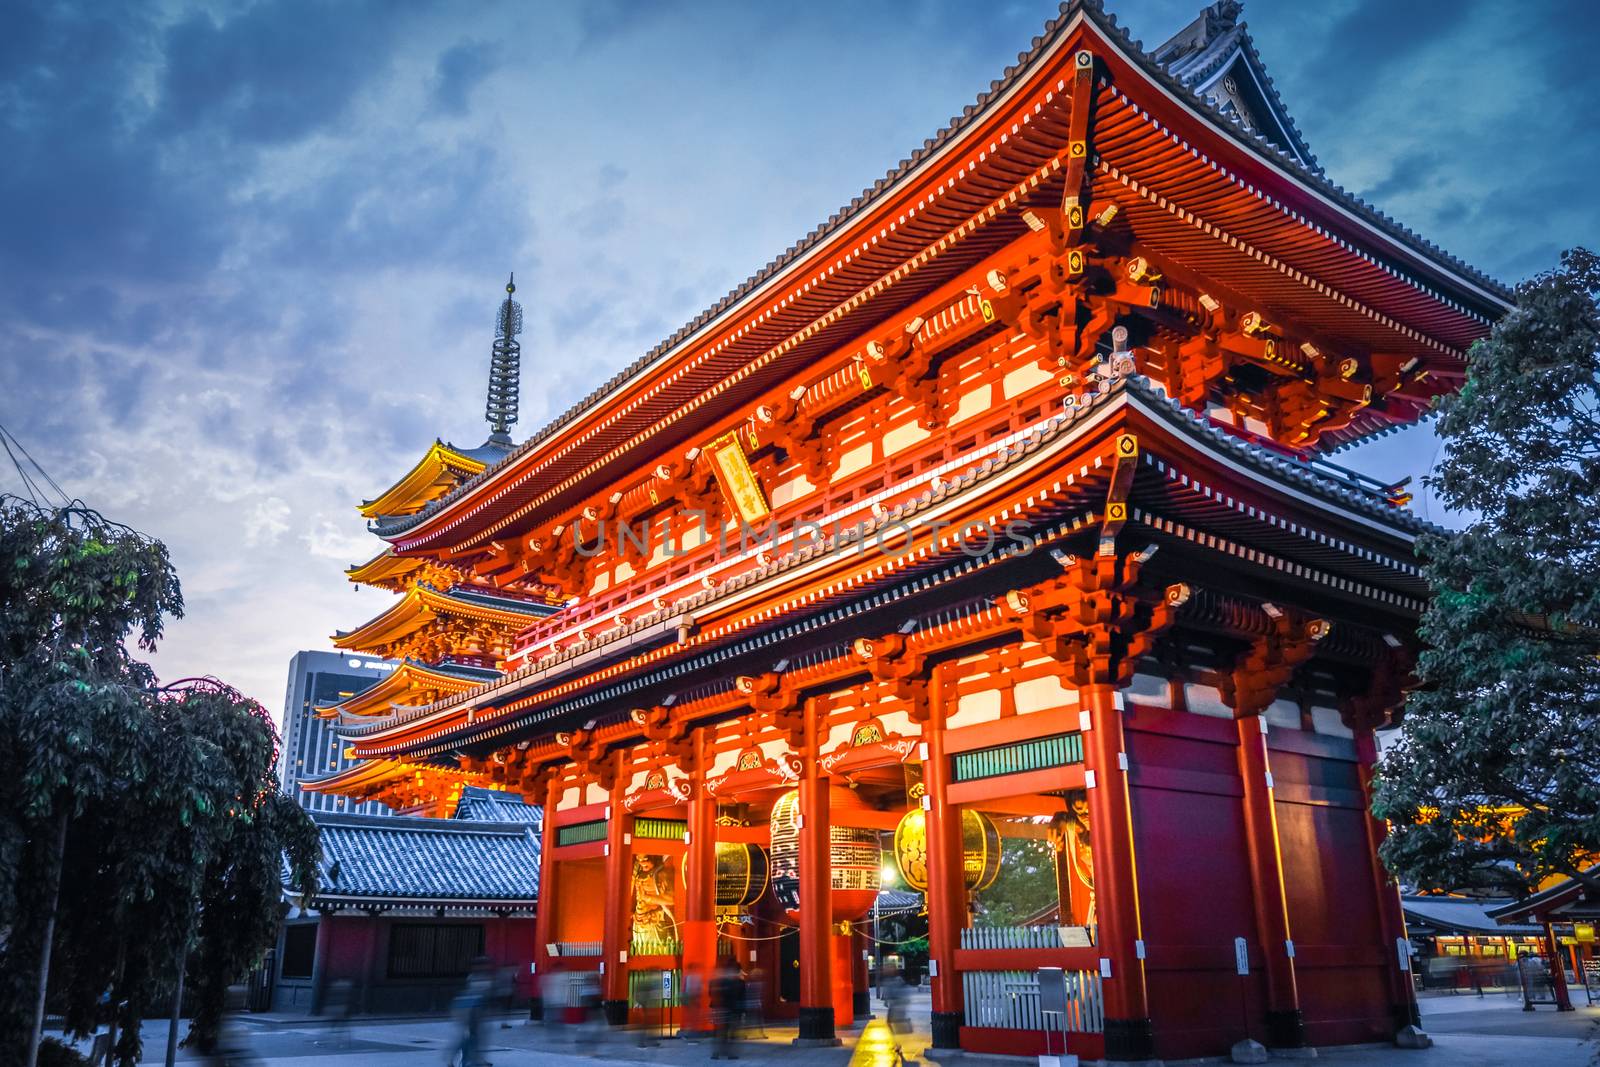 Kaminarimon gate and Pagoda, Senso-ji temple, Tokyo, Japan by daboost